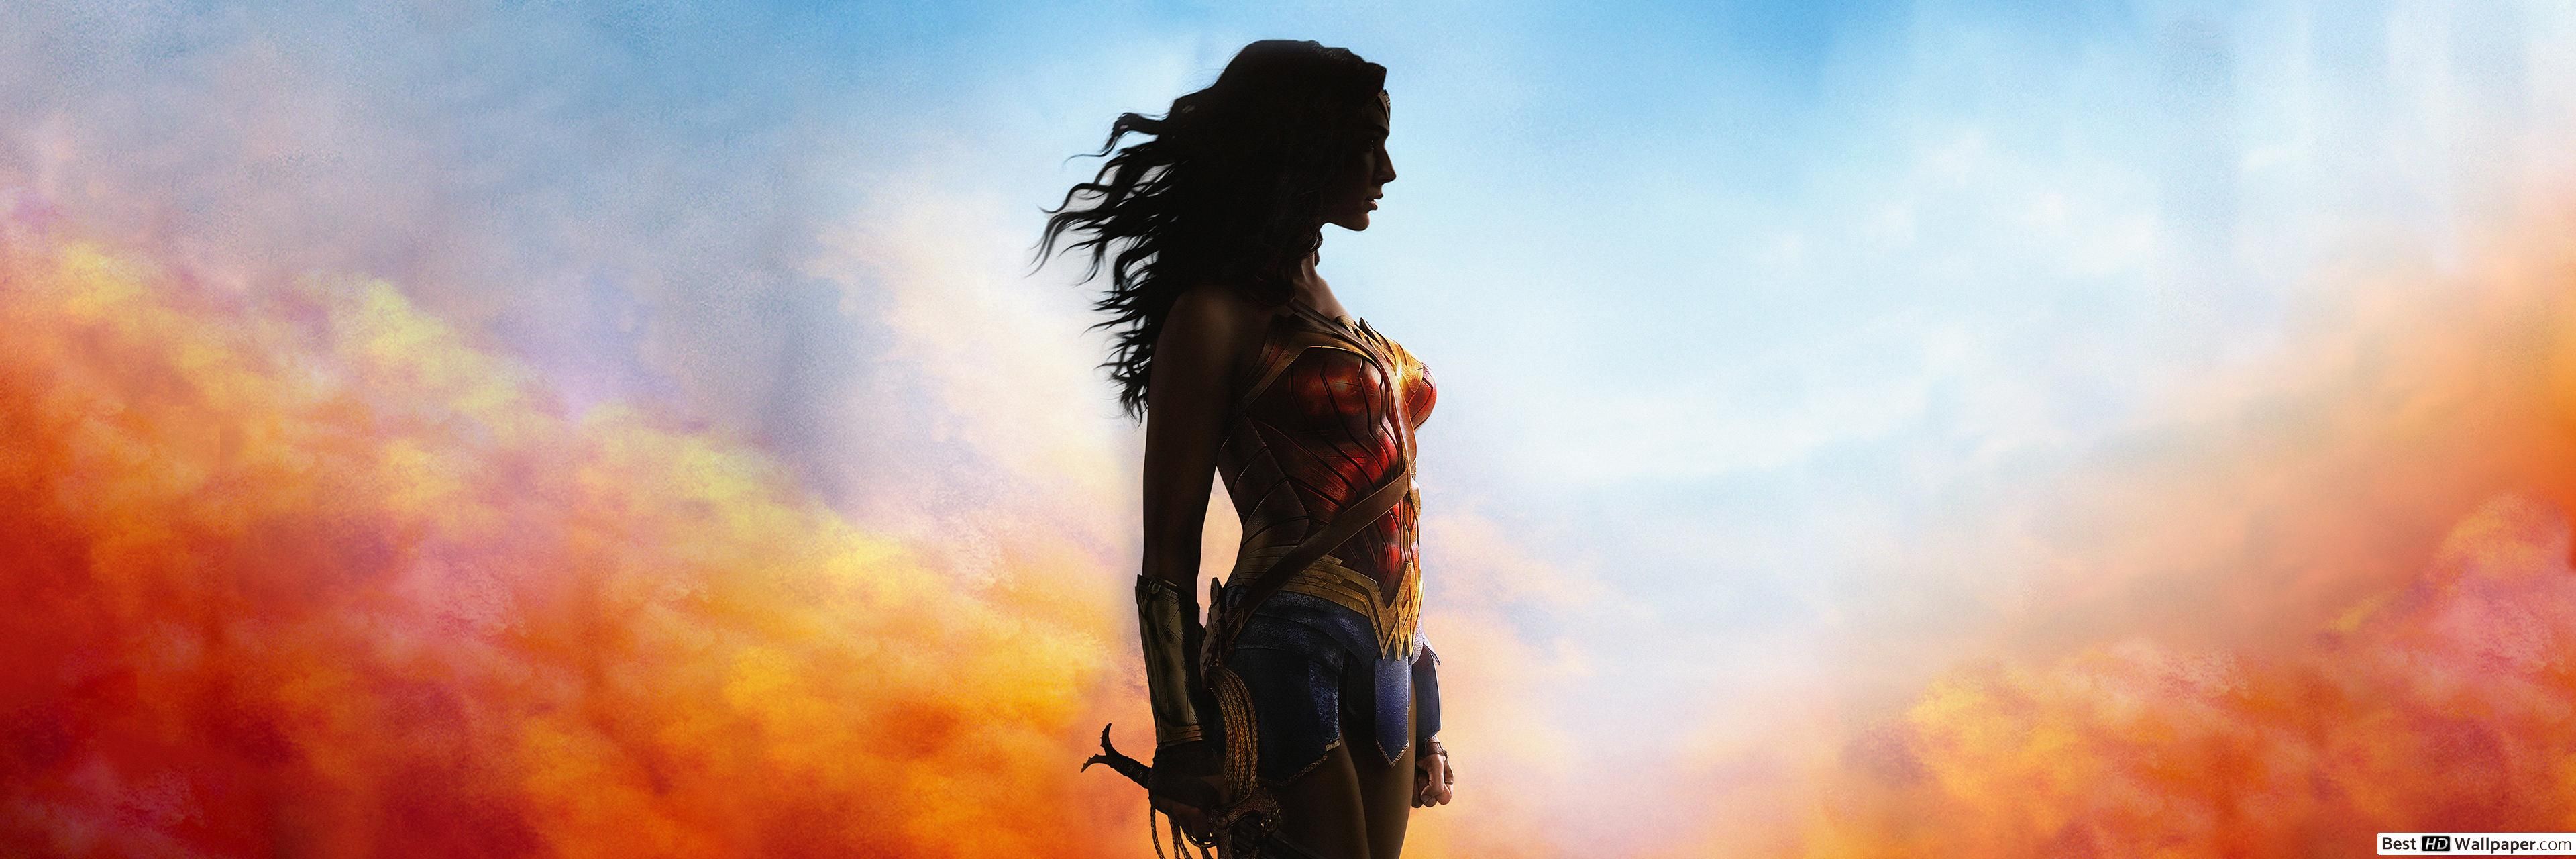 Wonder Woman HD wallpaper download